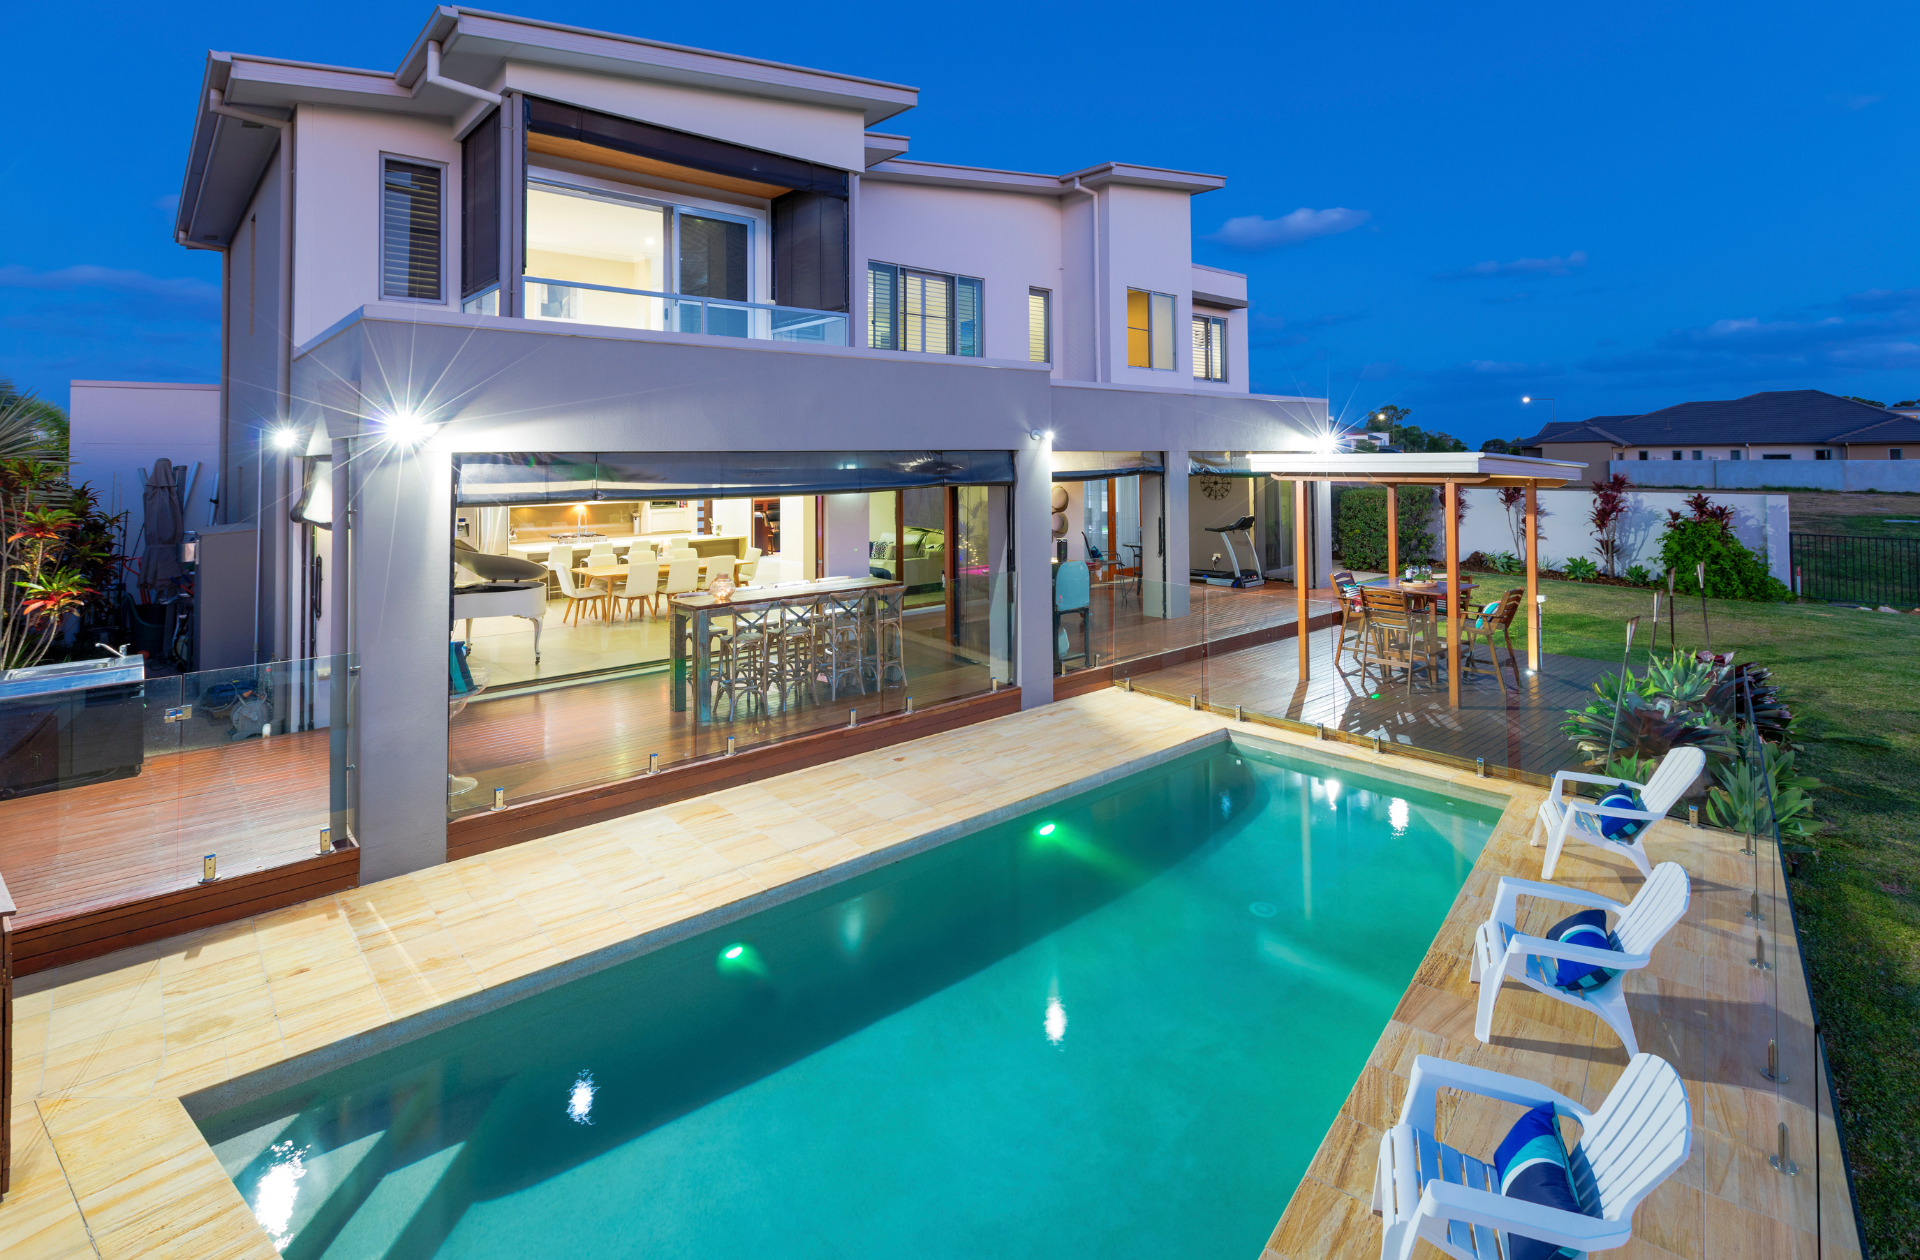 Custom luxury deck behind a massive mansion, customized to fit around a custom slender pool - backyard paradise